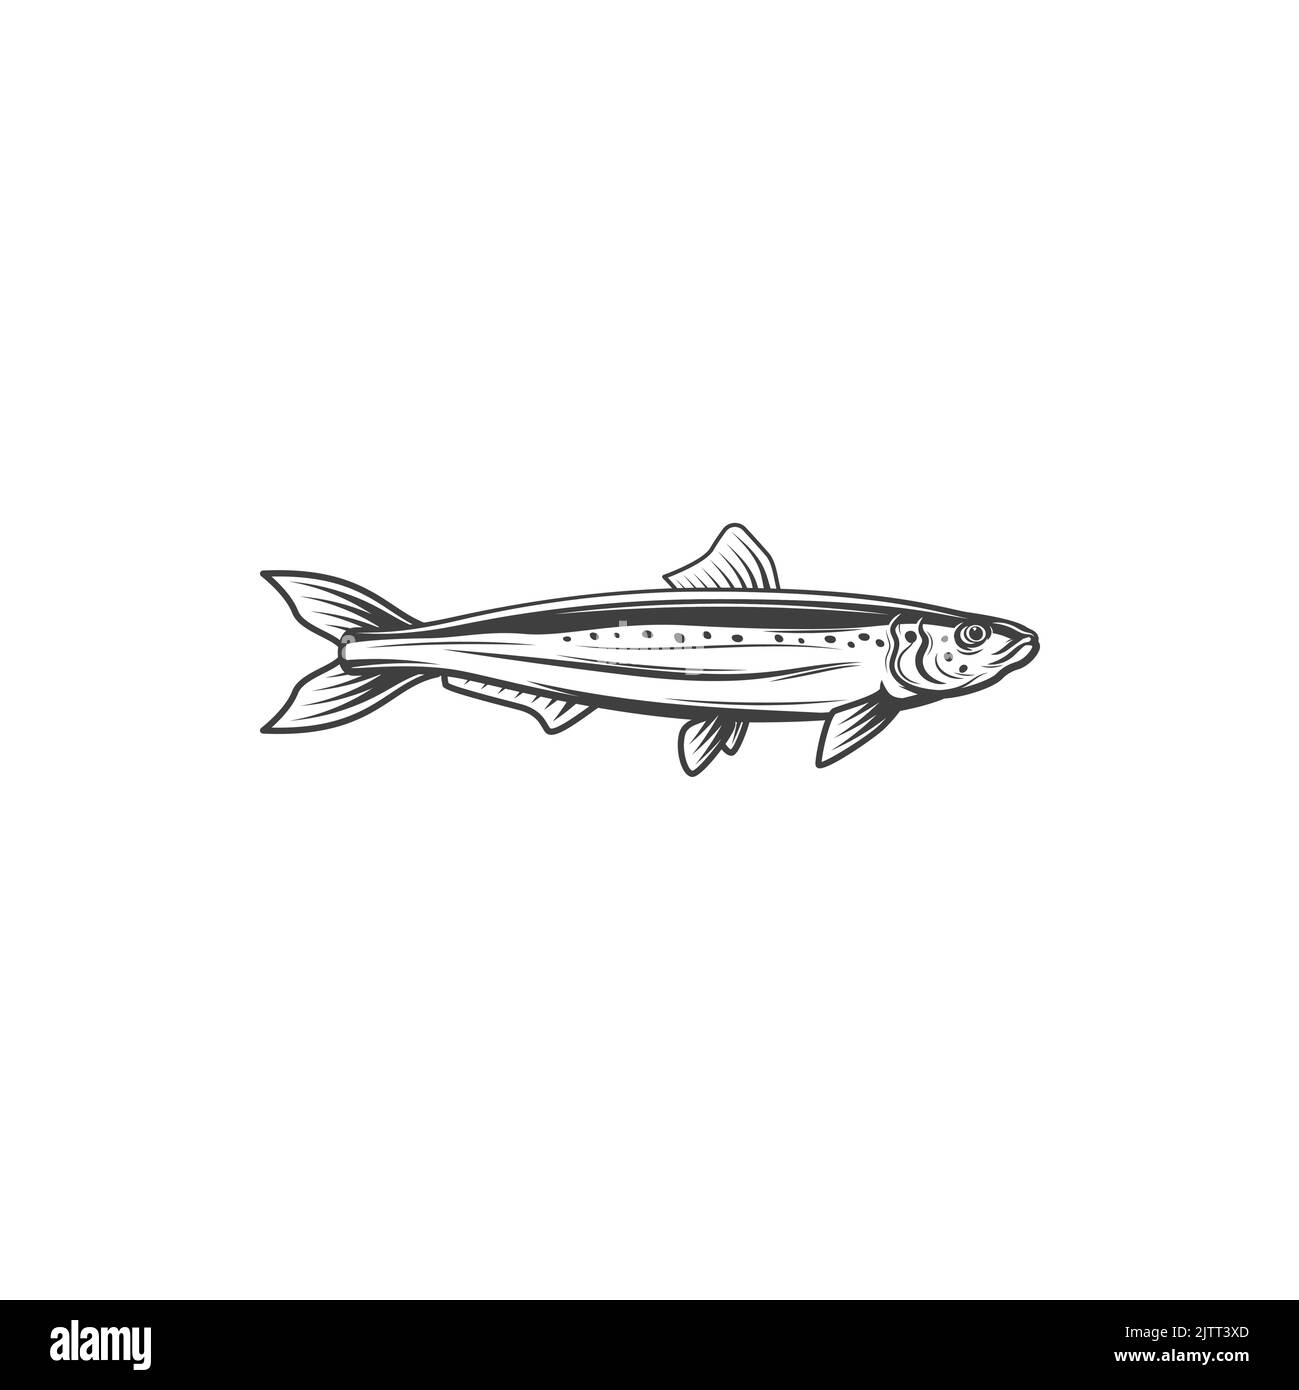 Pelagic fish Black and White Stock Photos & Images - Alamy